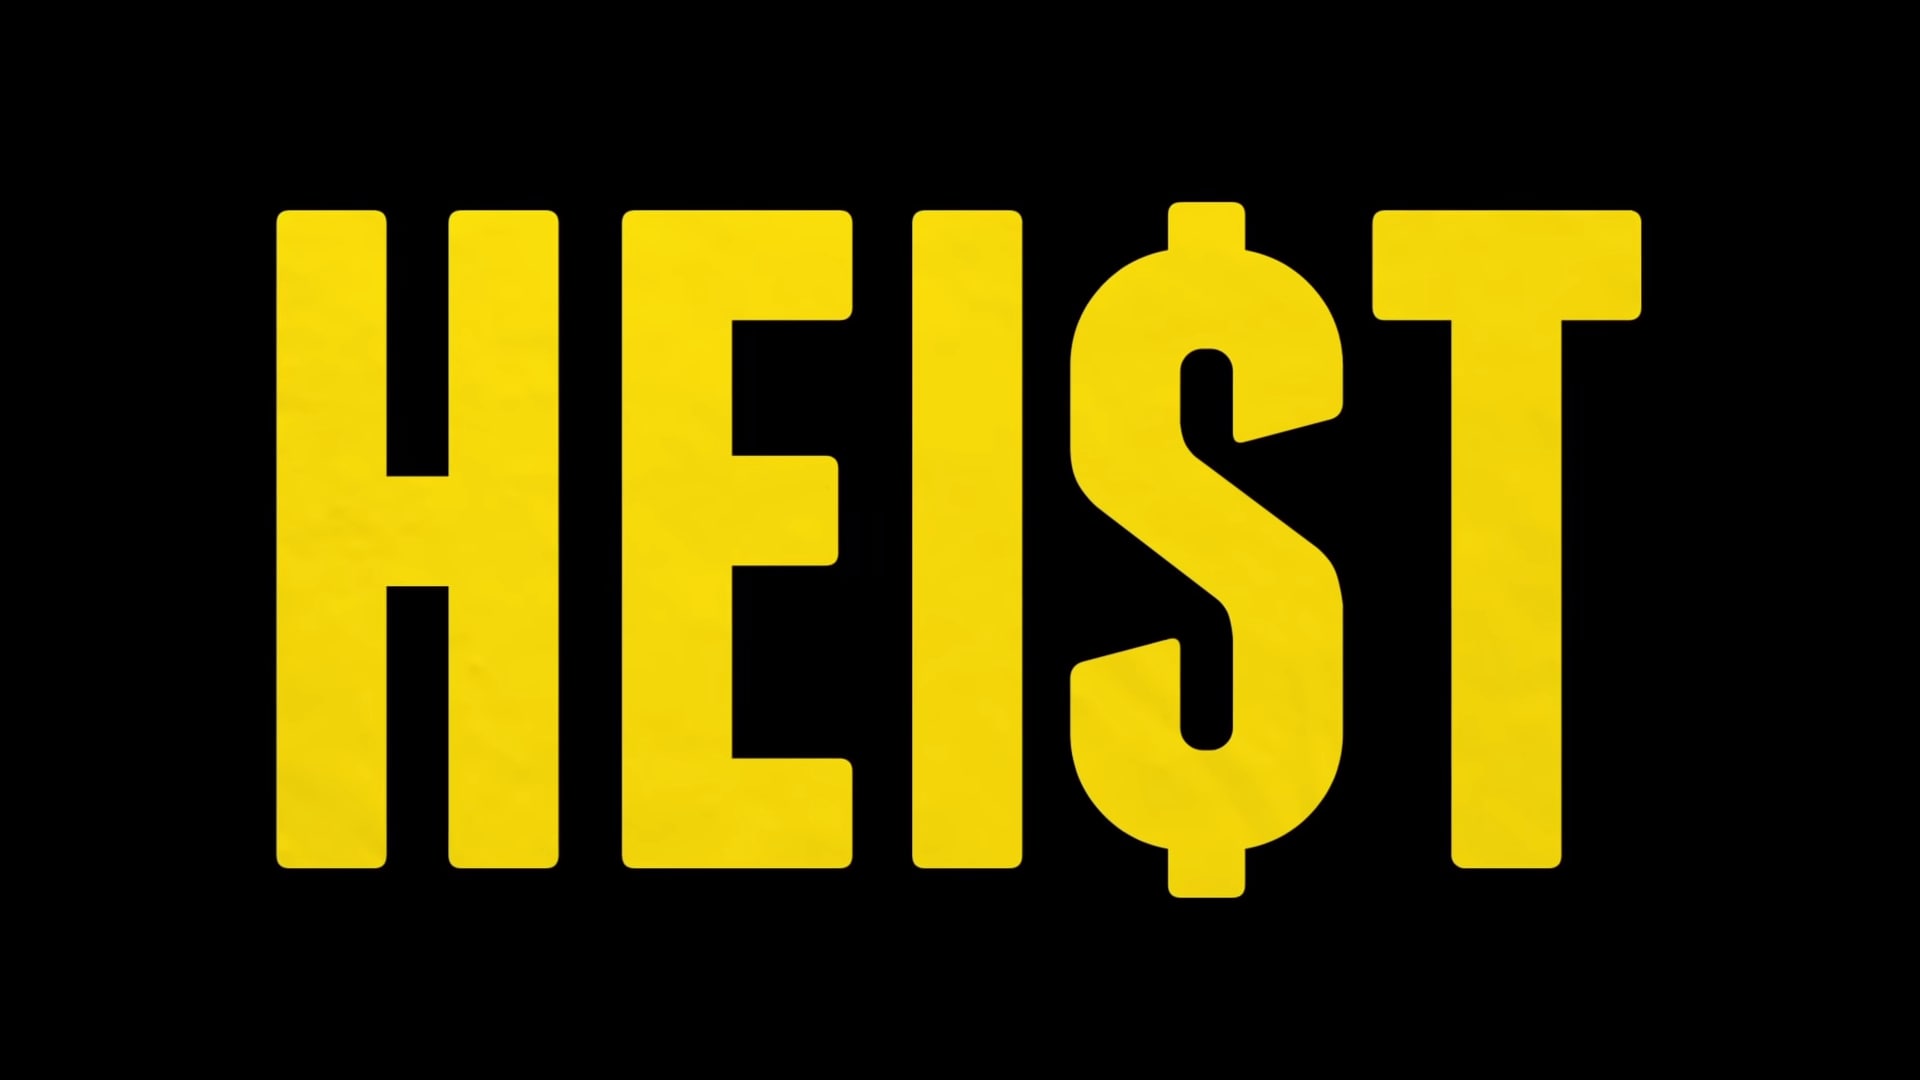 Netflix Heist Trailer, Coming to Netflix in July 2021